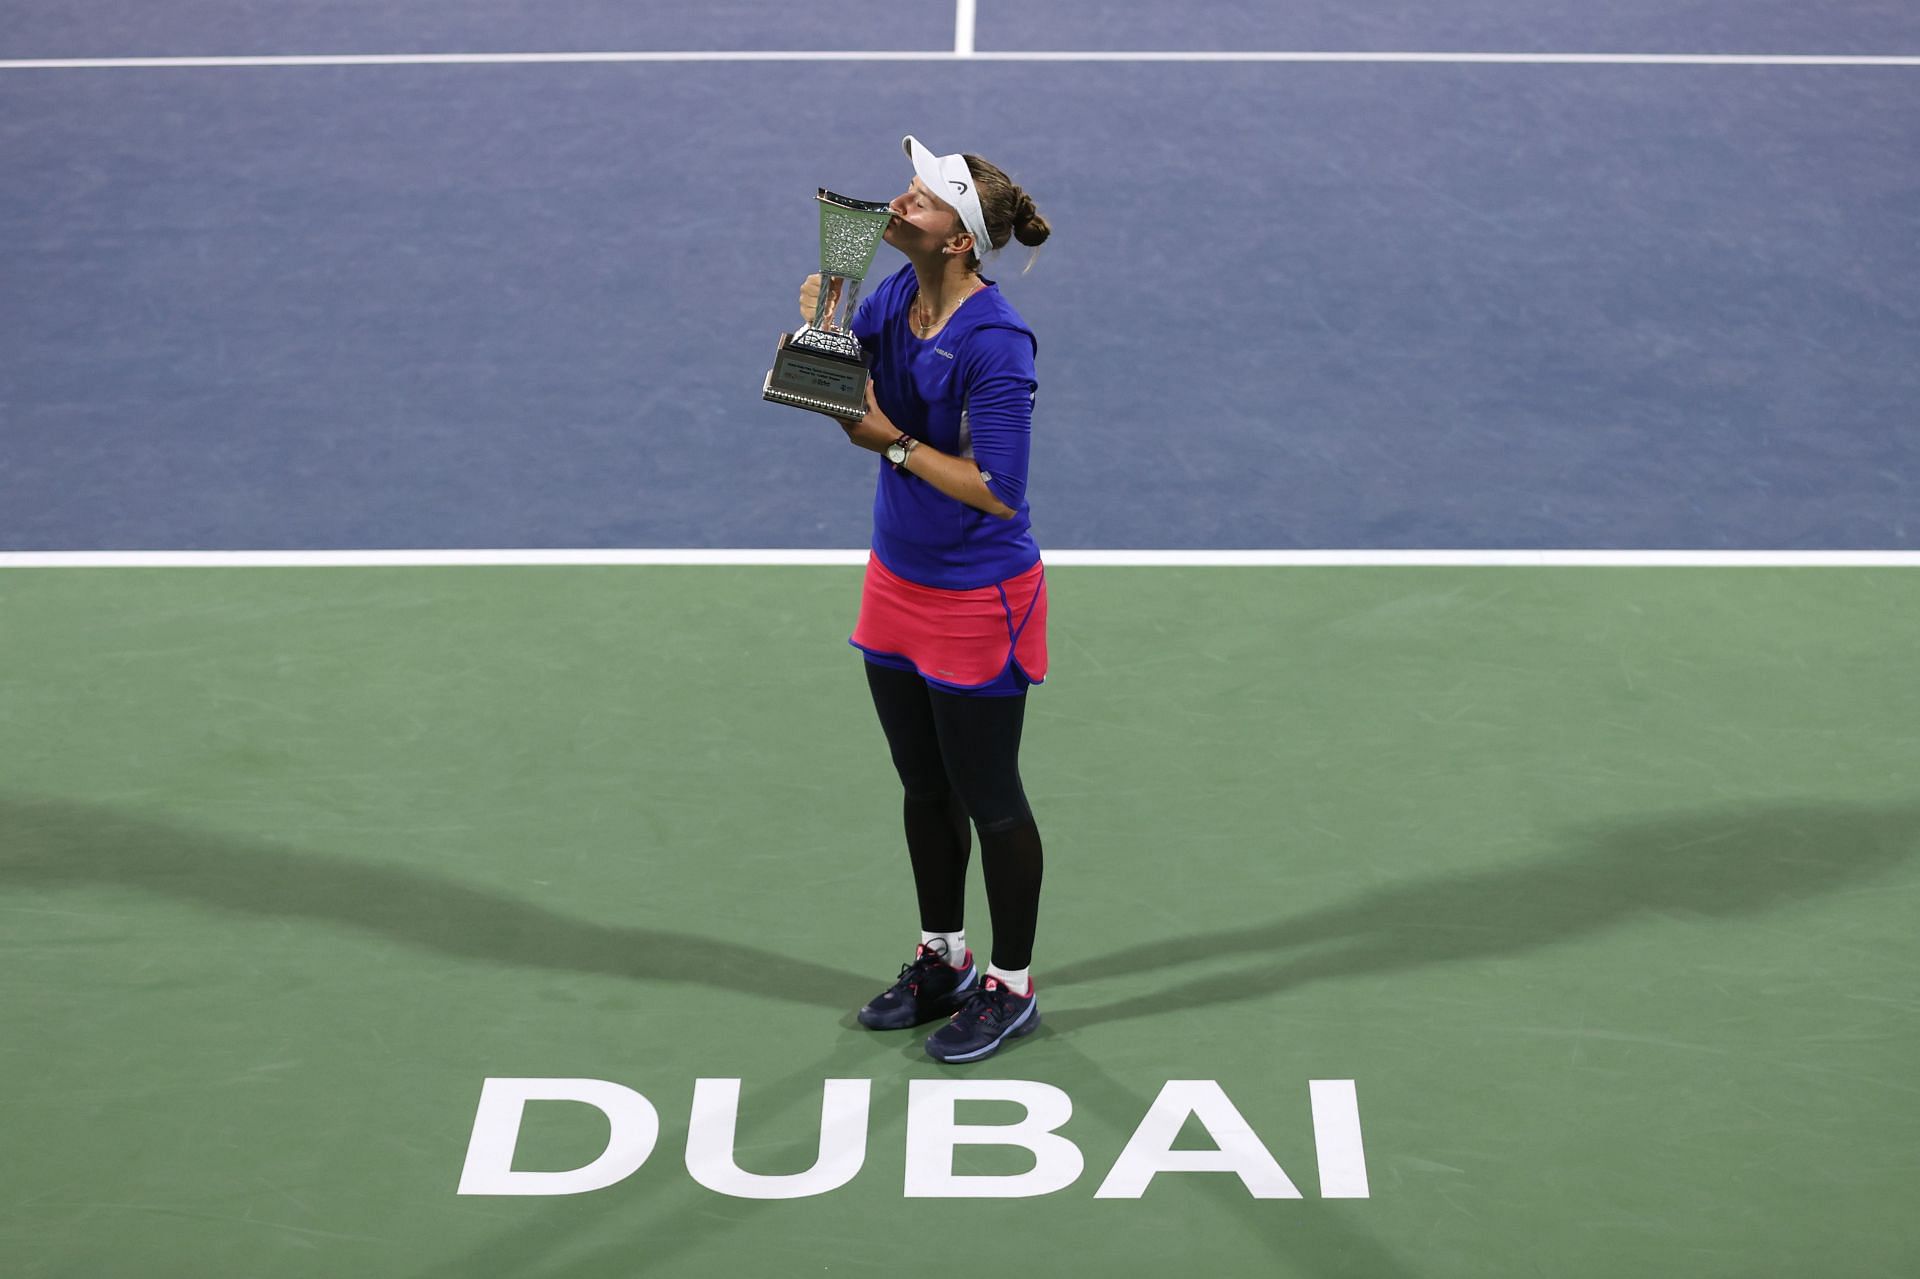 Barbora Krejcikova reached the finals of the Dubai Tennis Championships last year